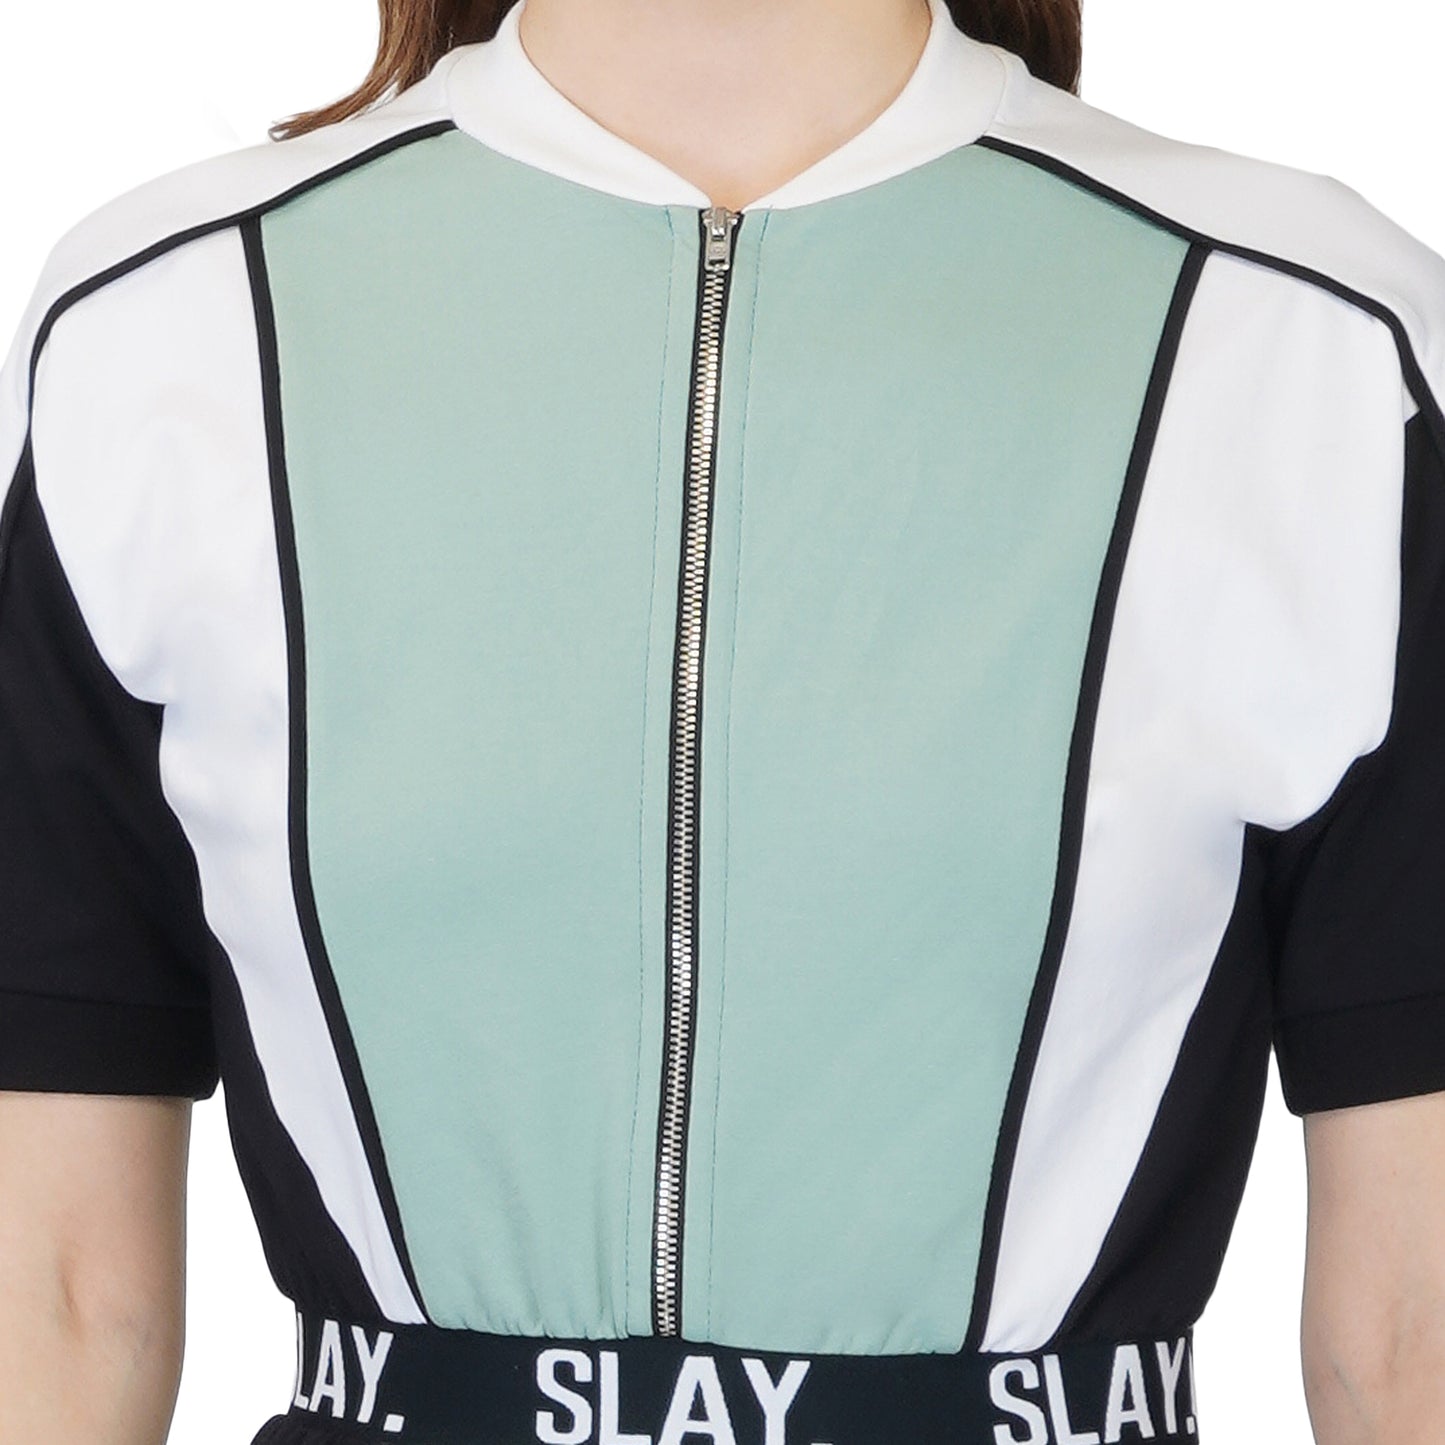 SLAY. Women's Colorblock Romper Turquoise White Black